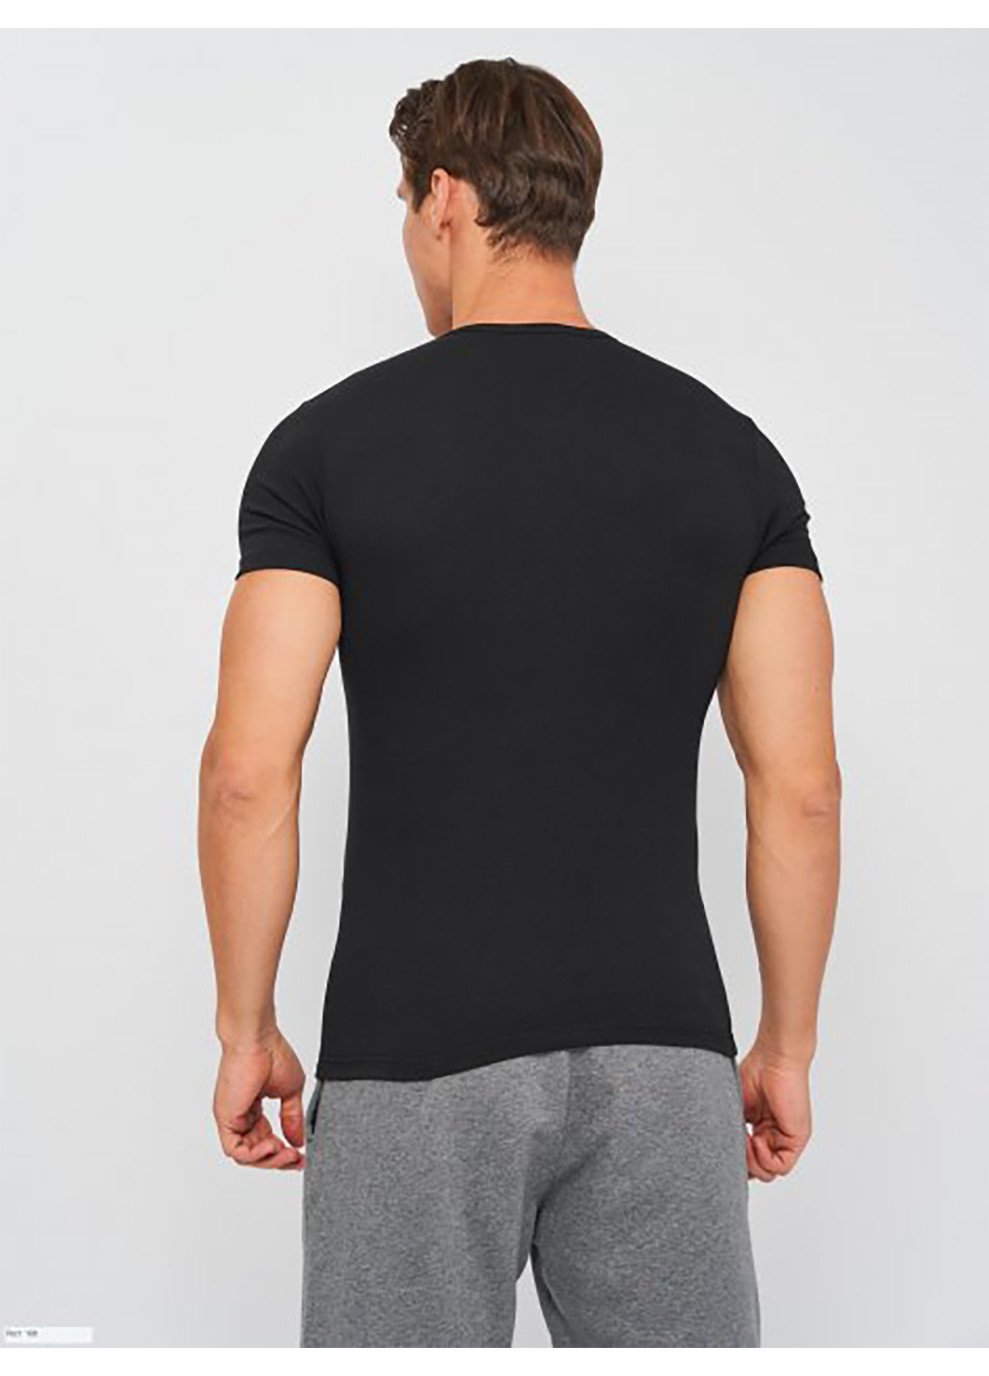 Черная футболка t-shirt mezza manica girocollo черный 2xl муж k1305 nero-2xl Kappa